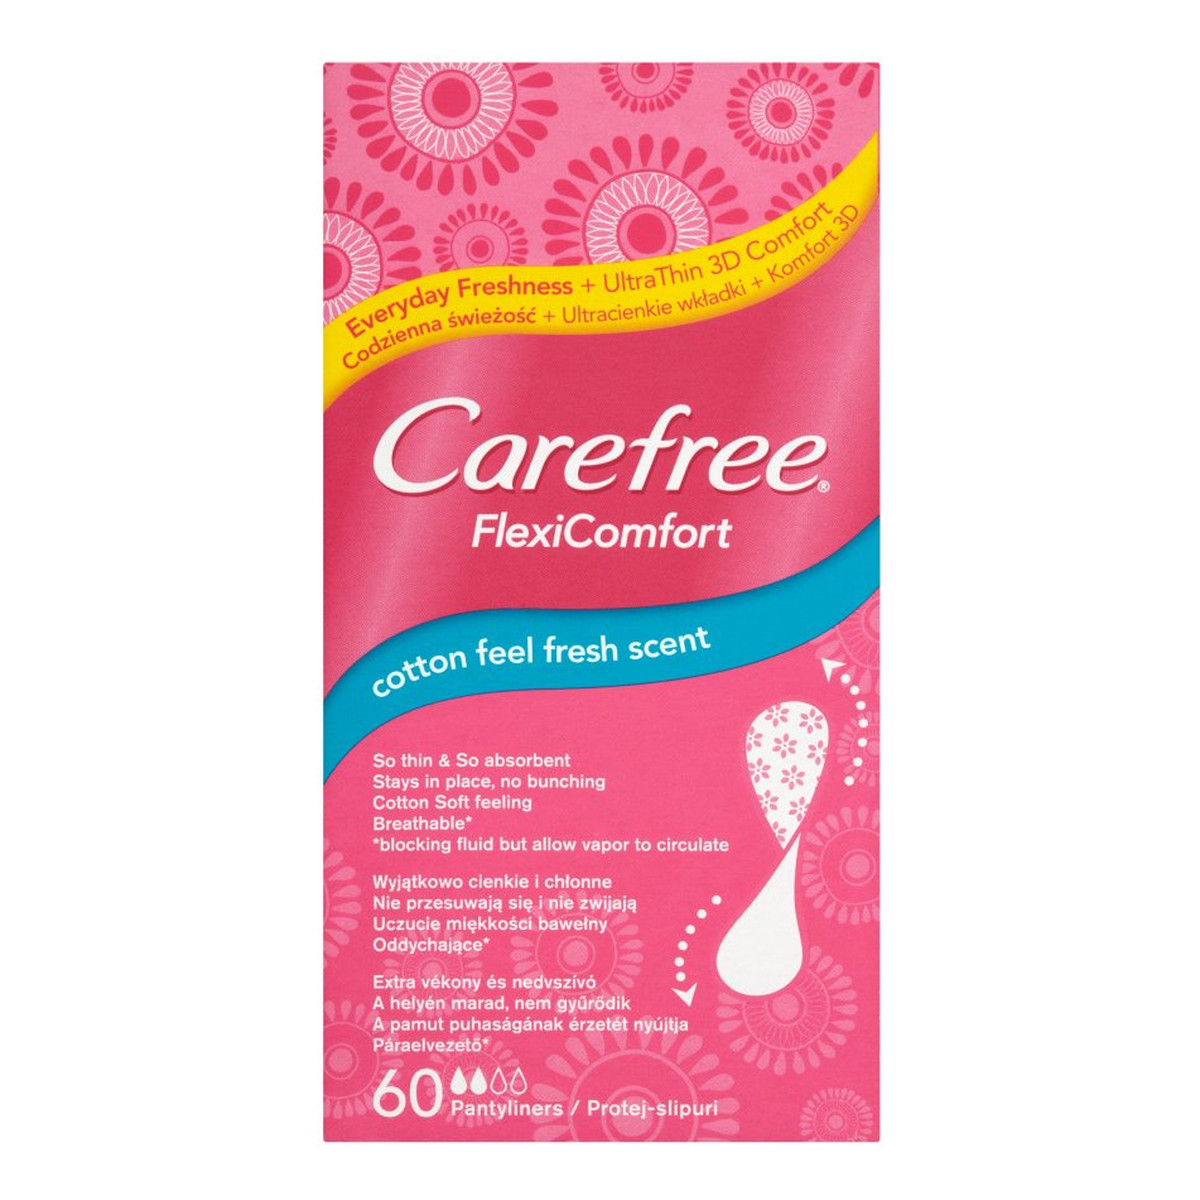 Carefree Flexi Comfort Cotton Feel Fresh Scent Wkładki higieniczne 60szt.